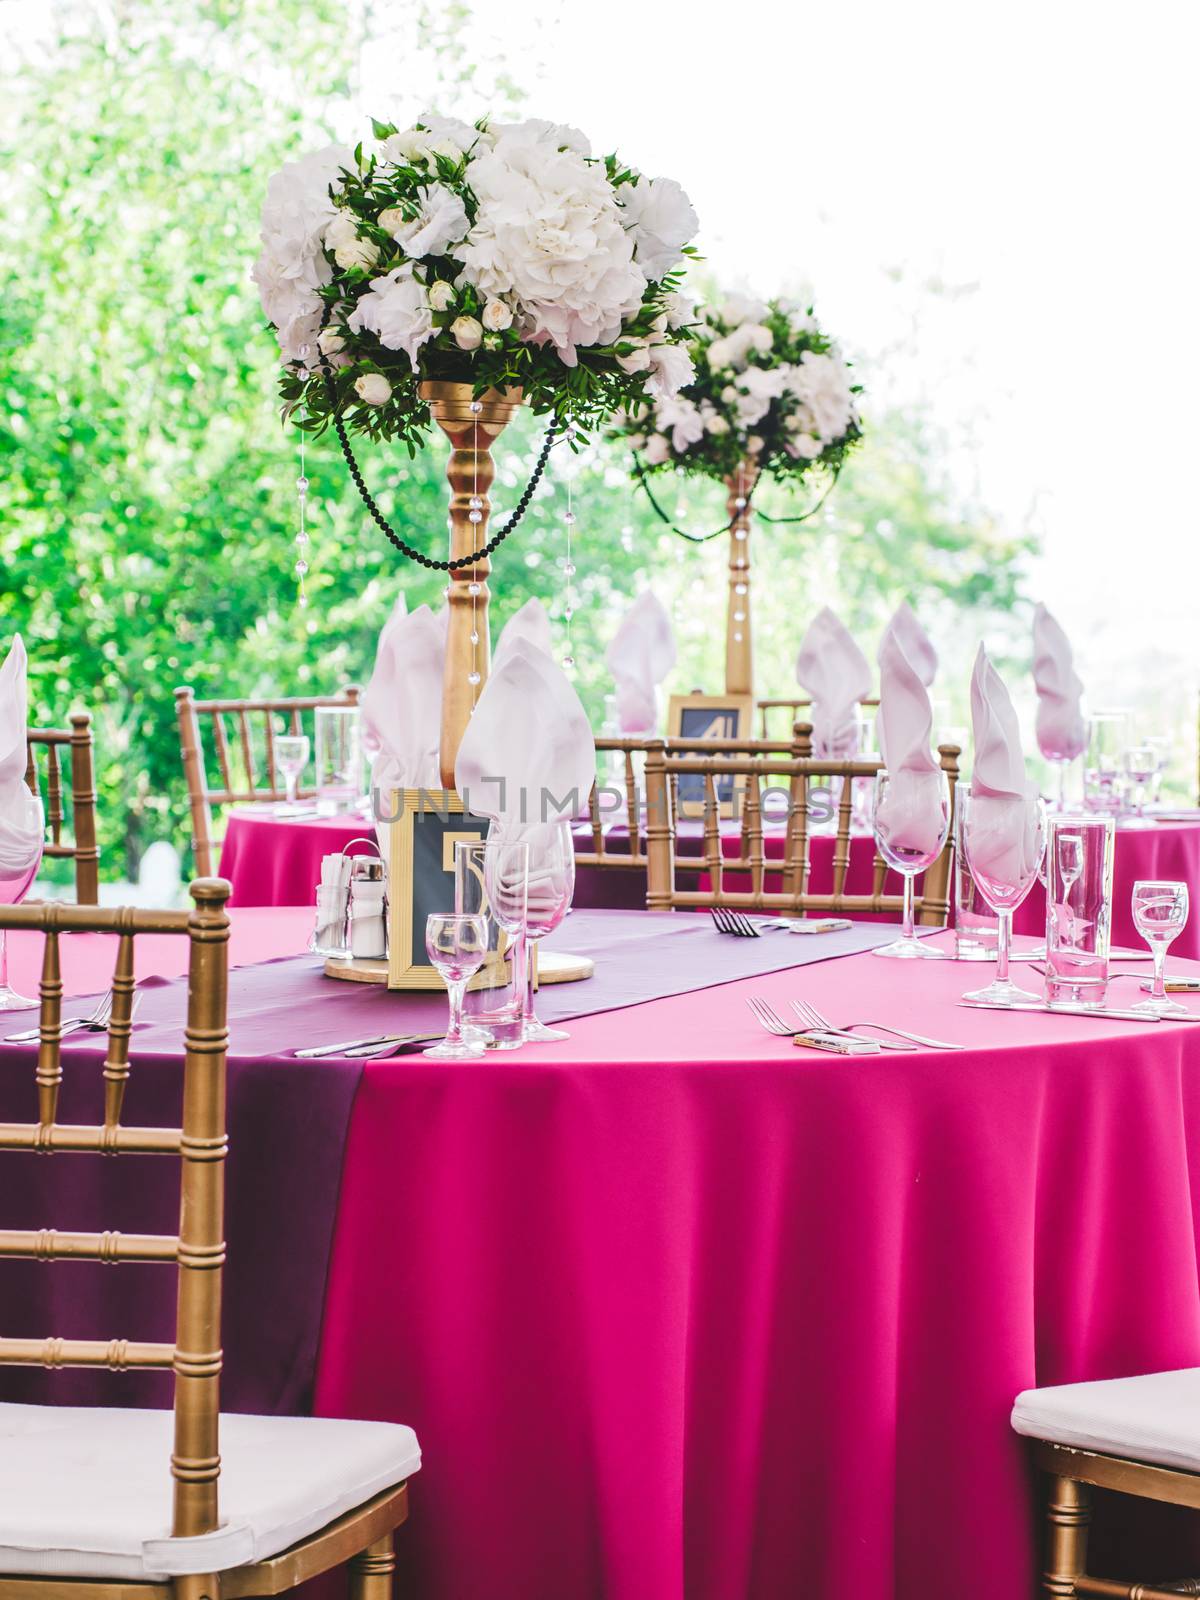 Beautiful dinner wedding table setting, summer outdoor